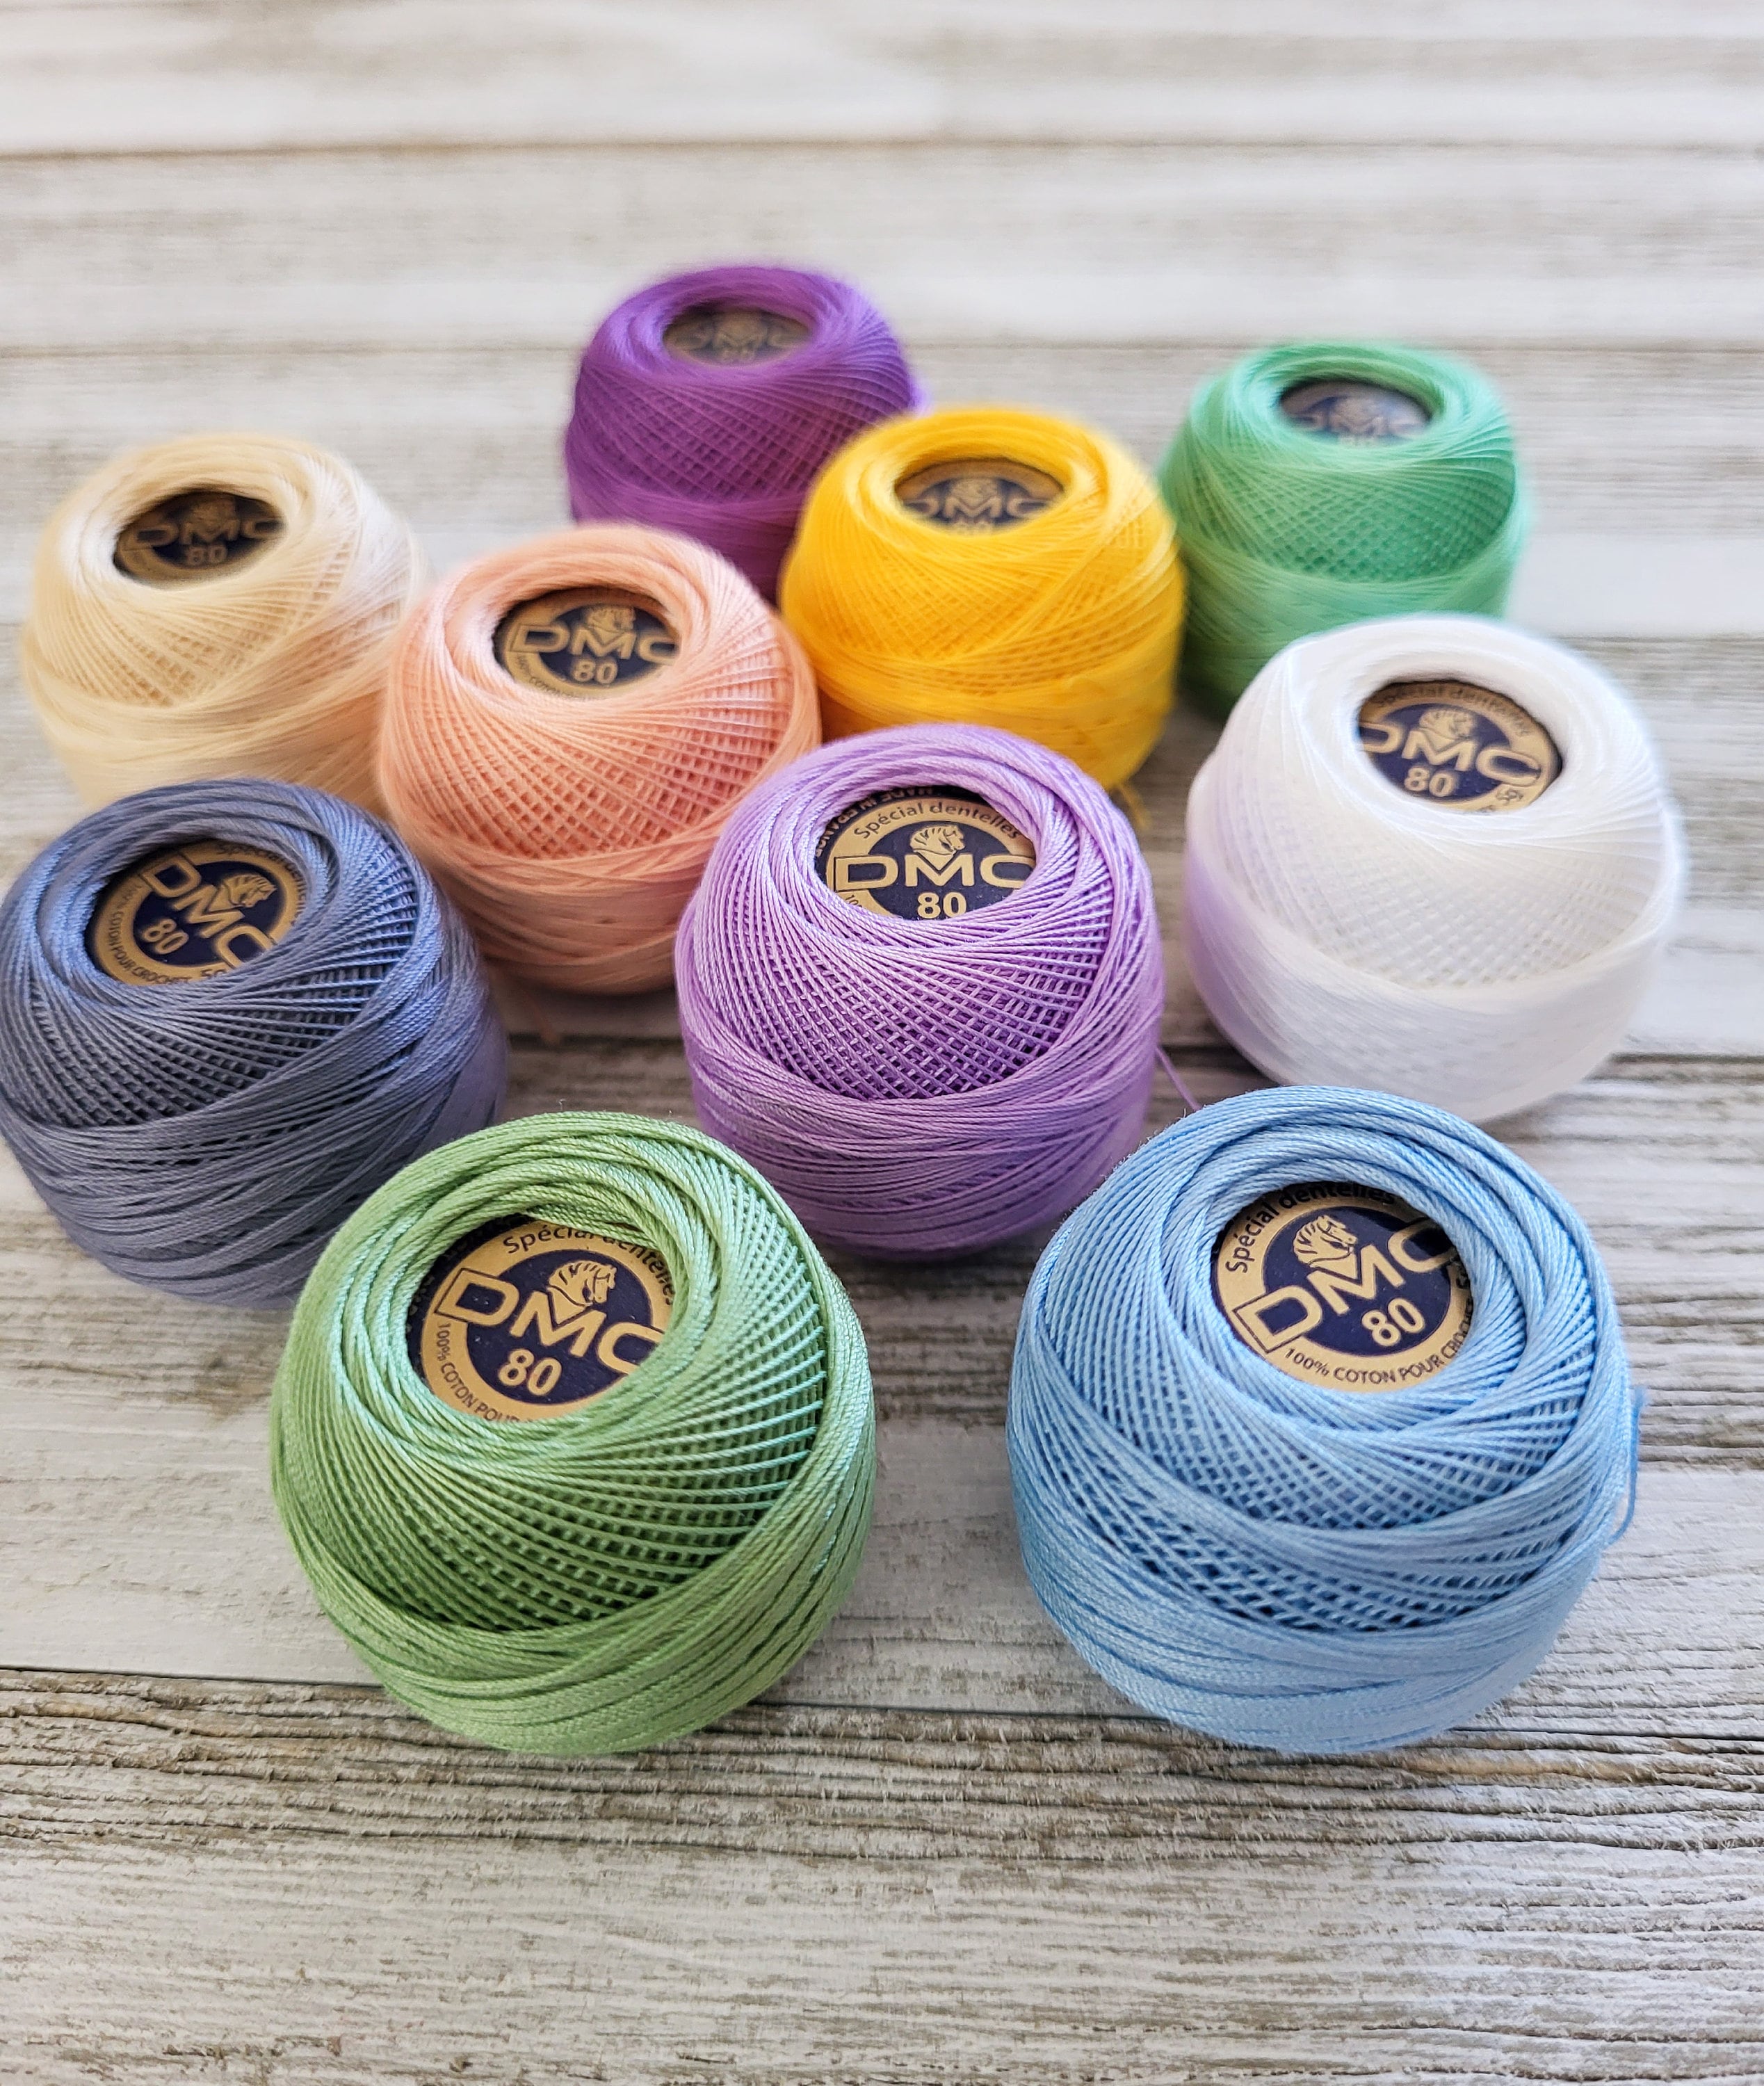 Crochet Cotton Thick Thread Floss Thread Size 12 for Crochet